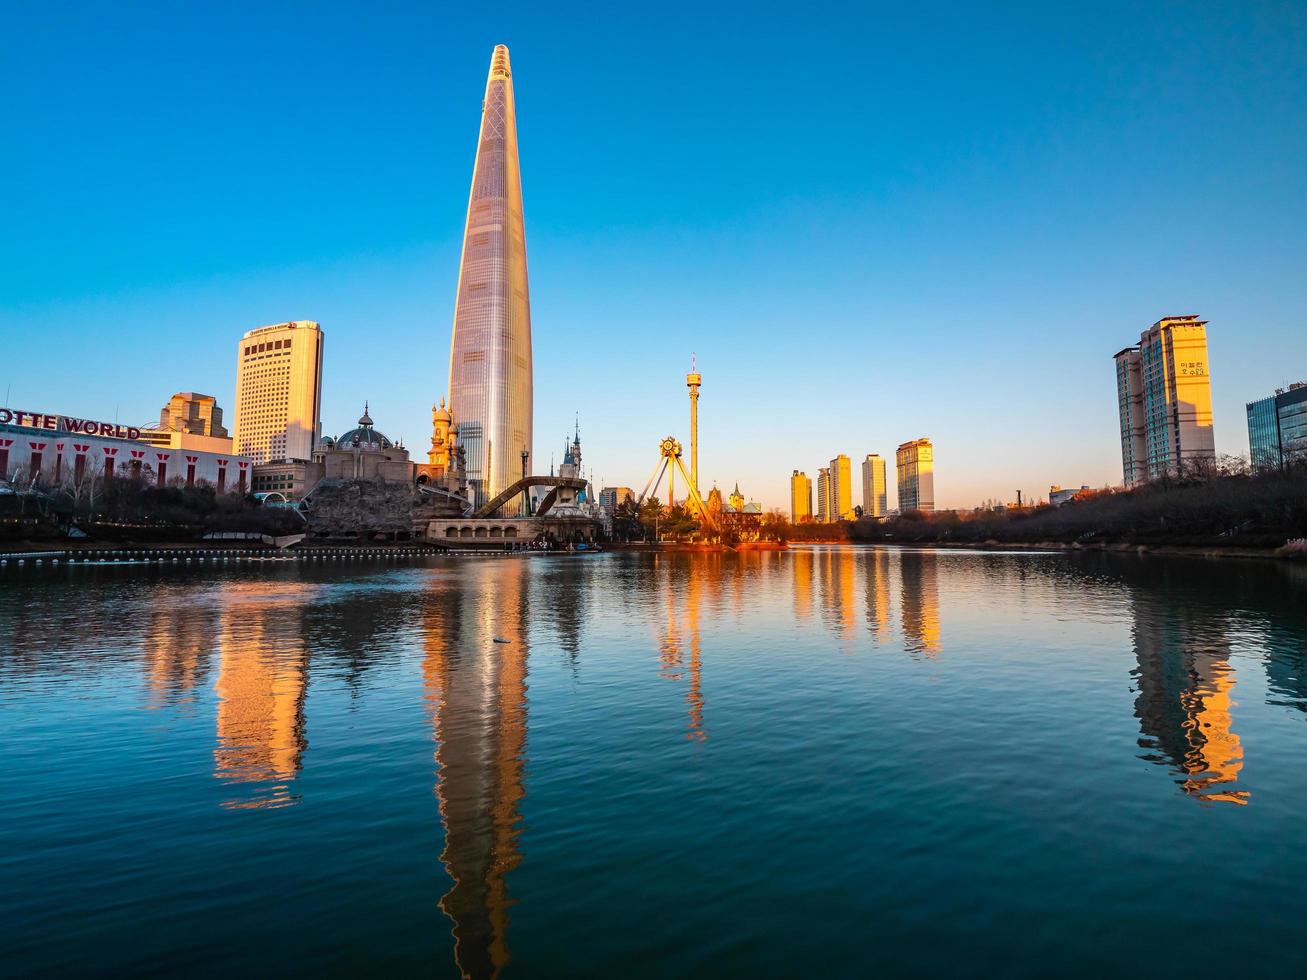 Lotte World Tower in Seoul, South Korea photo